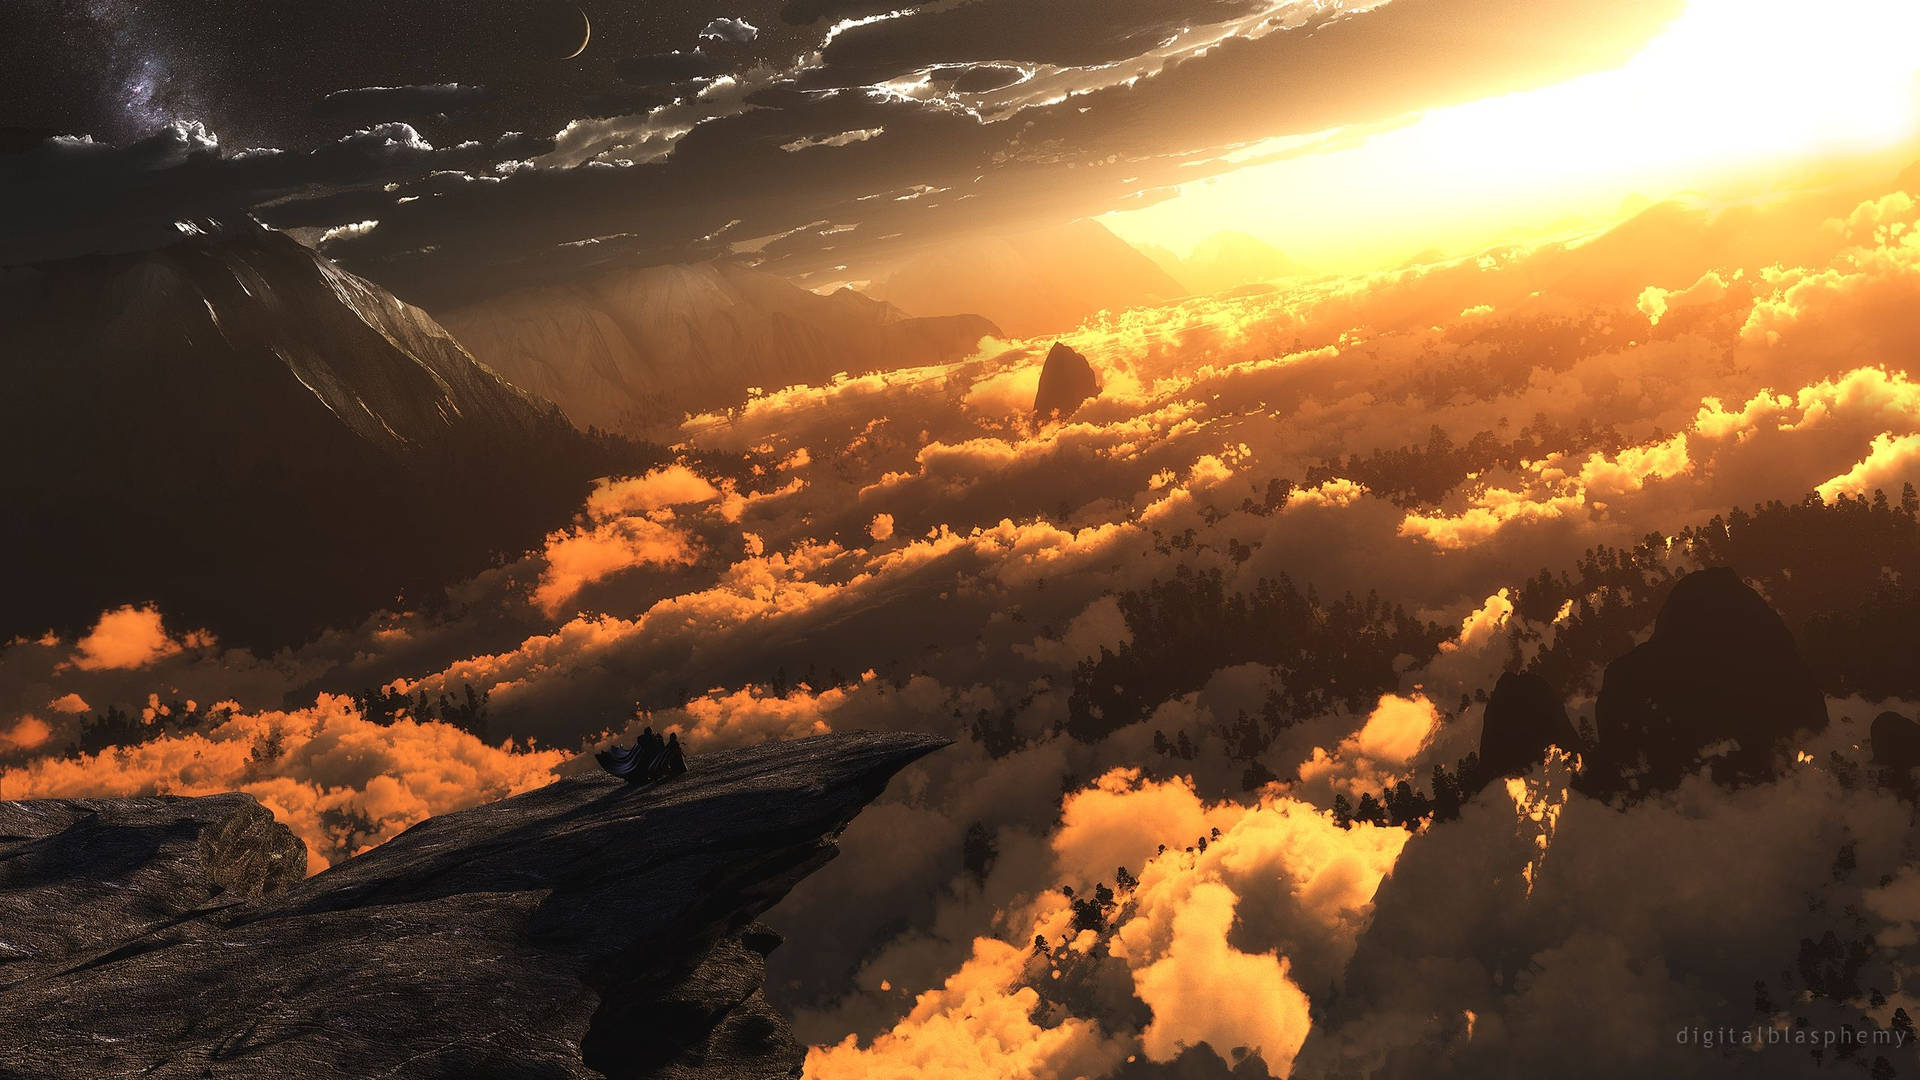 Majestic Fantasy Golden Mountain Peaks Under a Cloudy Sky Wallpaper